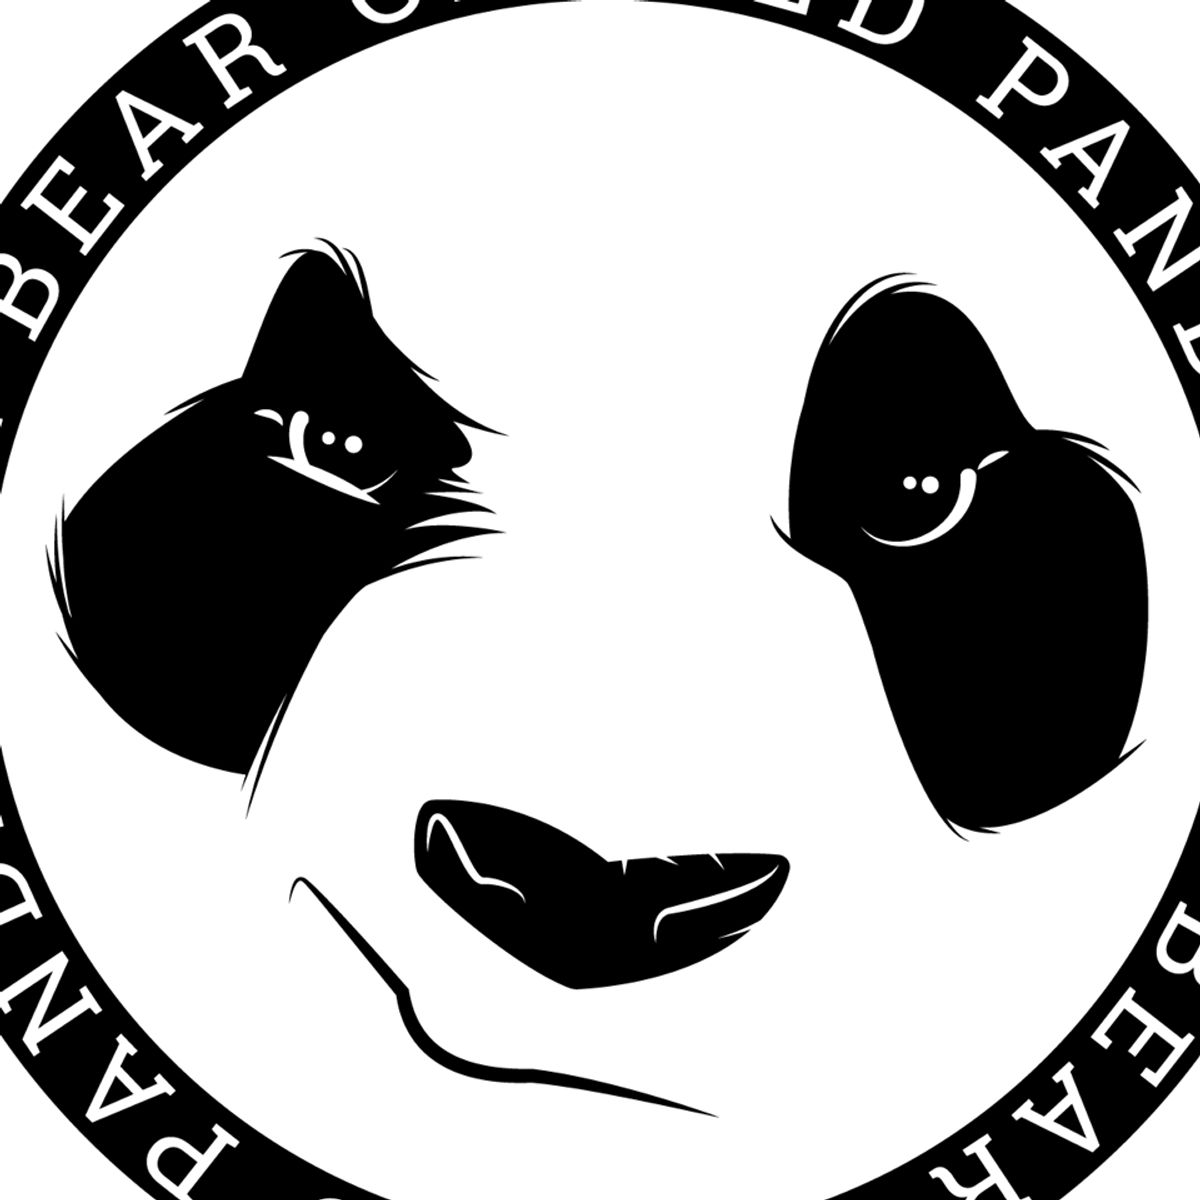 A Bear Called Panda - No Money